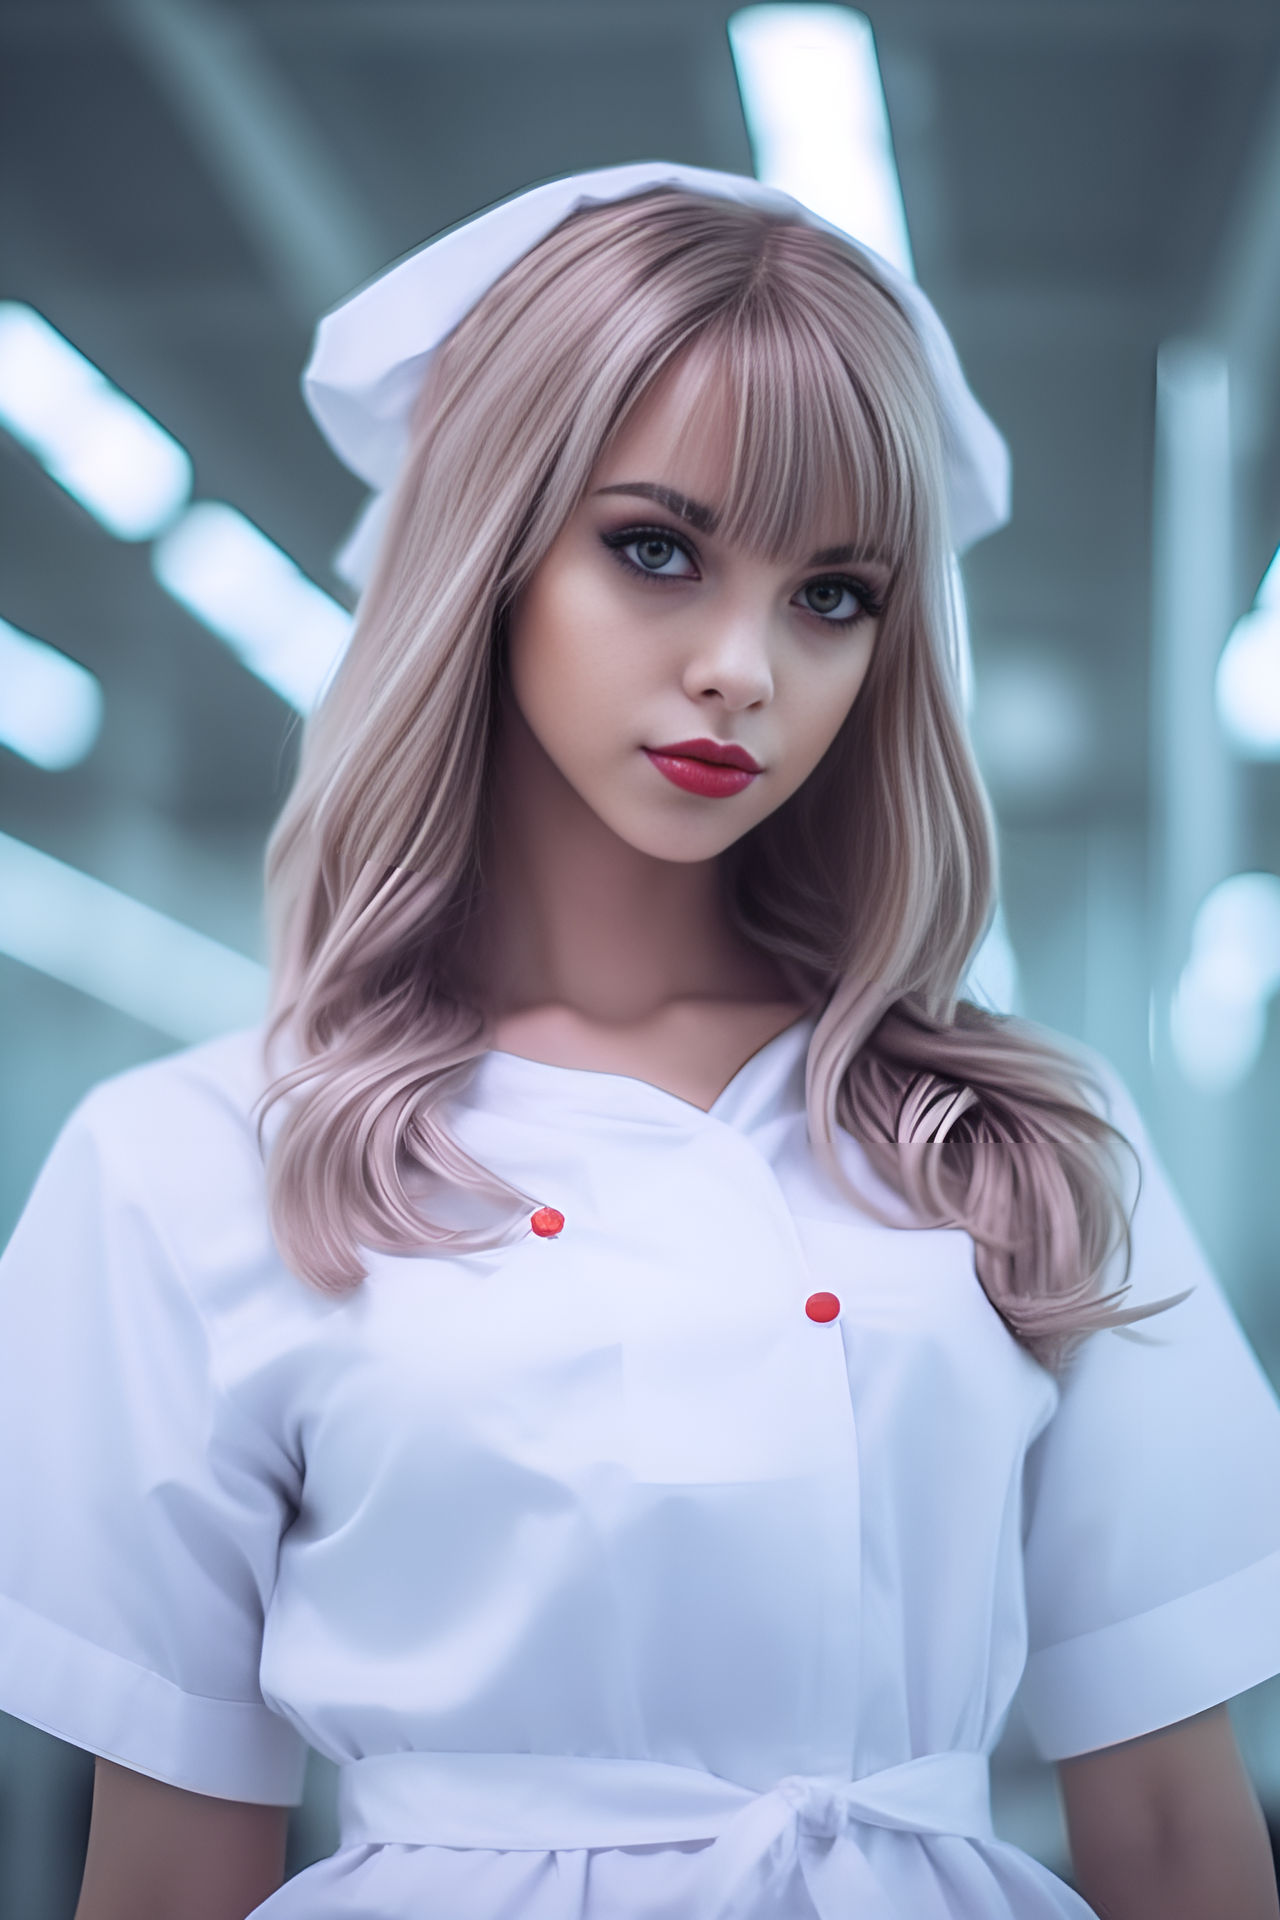 nurse_cosplay_by_ai_mademasterpieces_dfzd49y-fullview.jpg